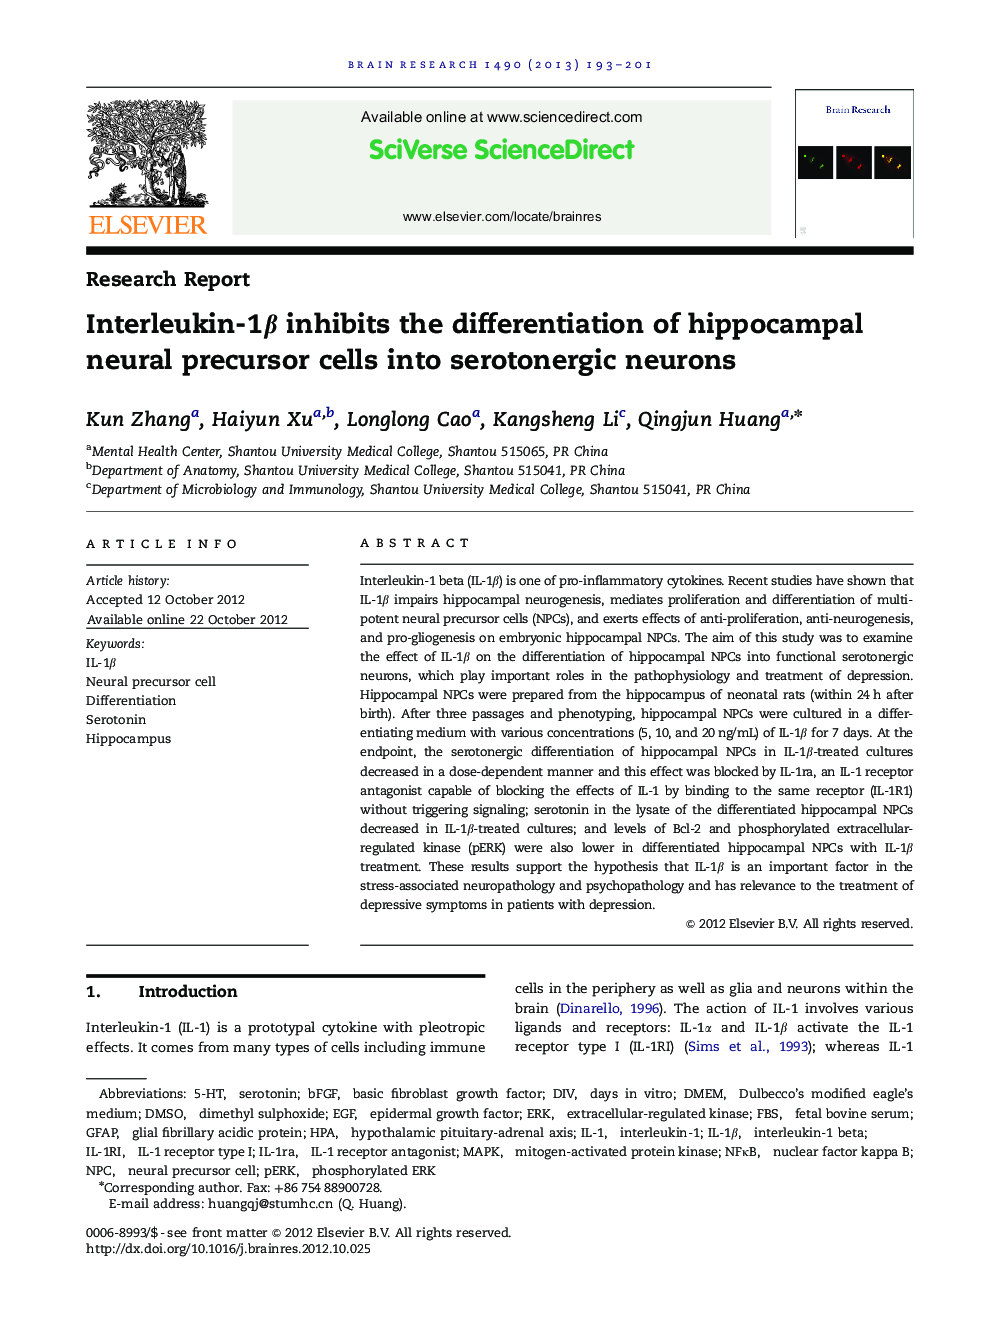 Interleukin-1β inhibits the differentiation of hippocampal neural precursor cells into serotonergic neurons